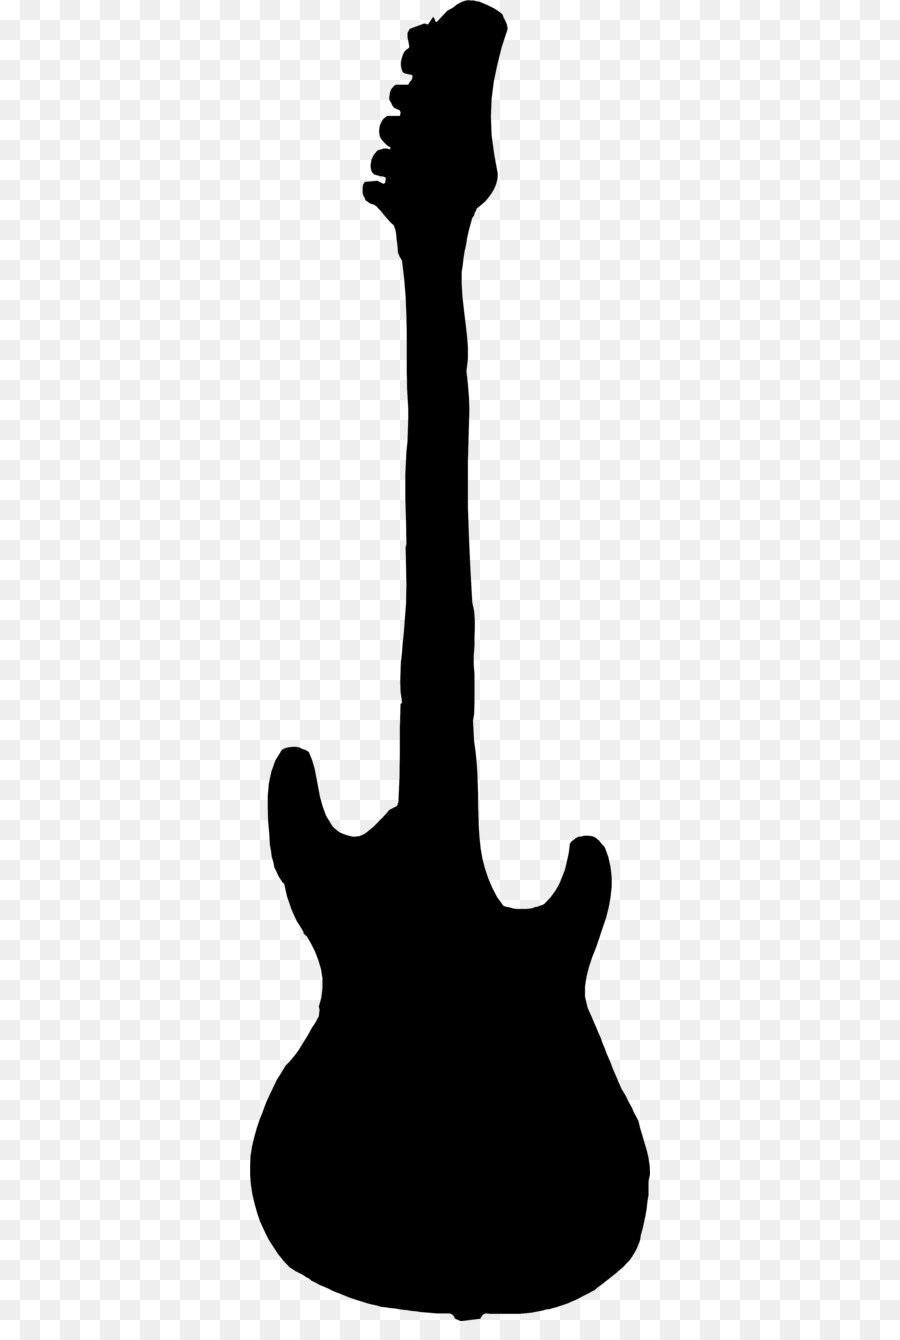 Electric guitar Gibson Flying V Clip art - Guitar Pumpkin Stencil png download - 400*1321 - Free Transparent Guitar png Download.